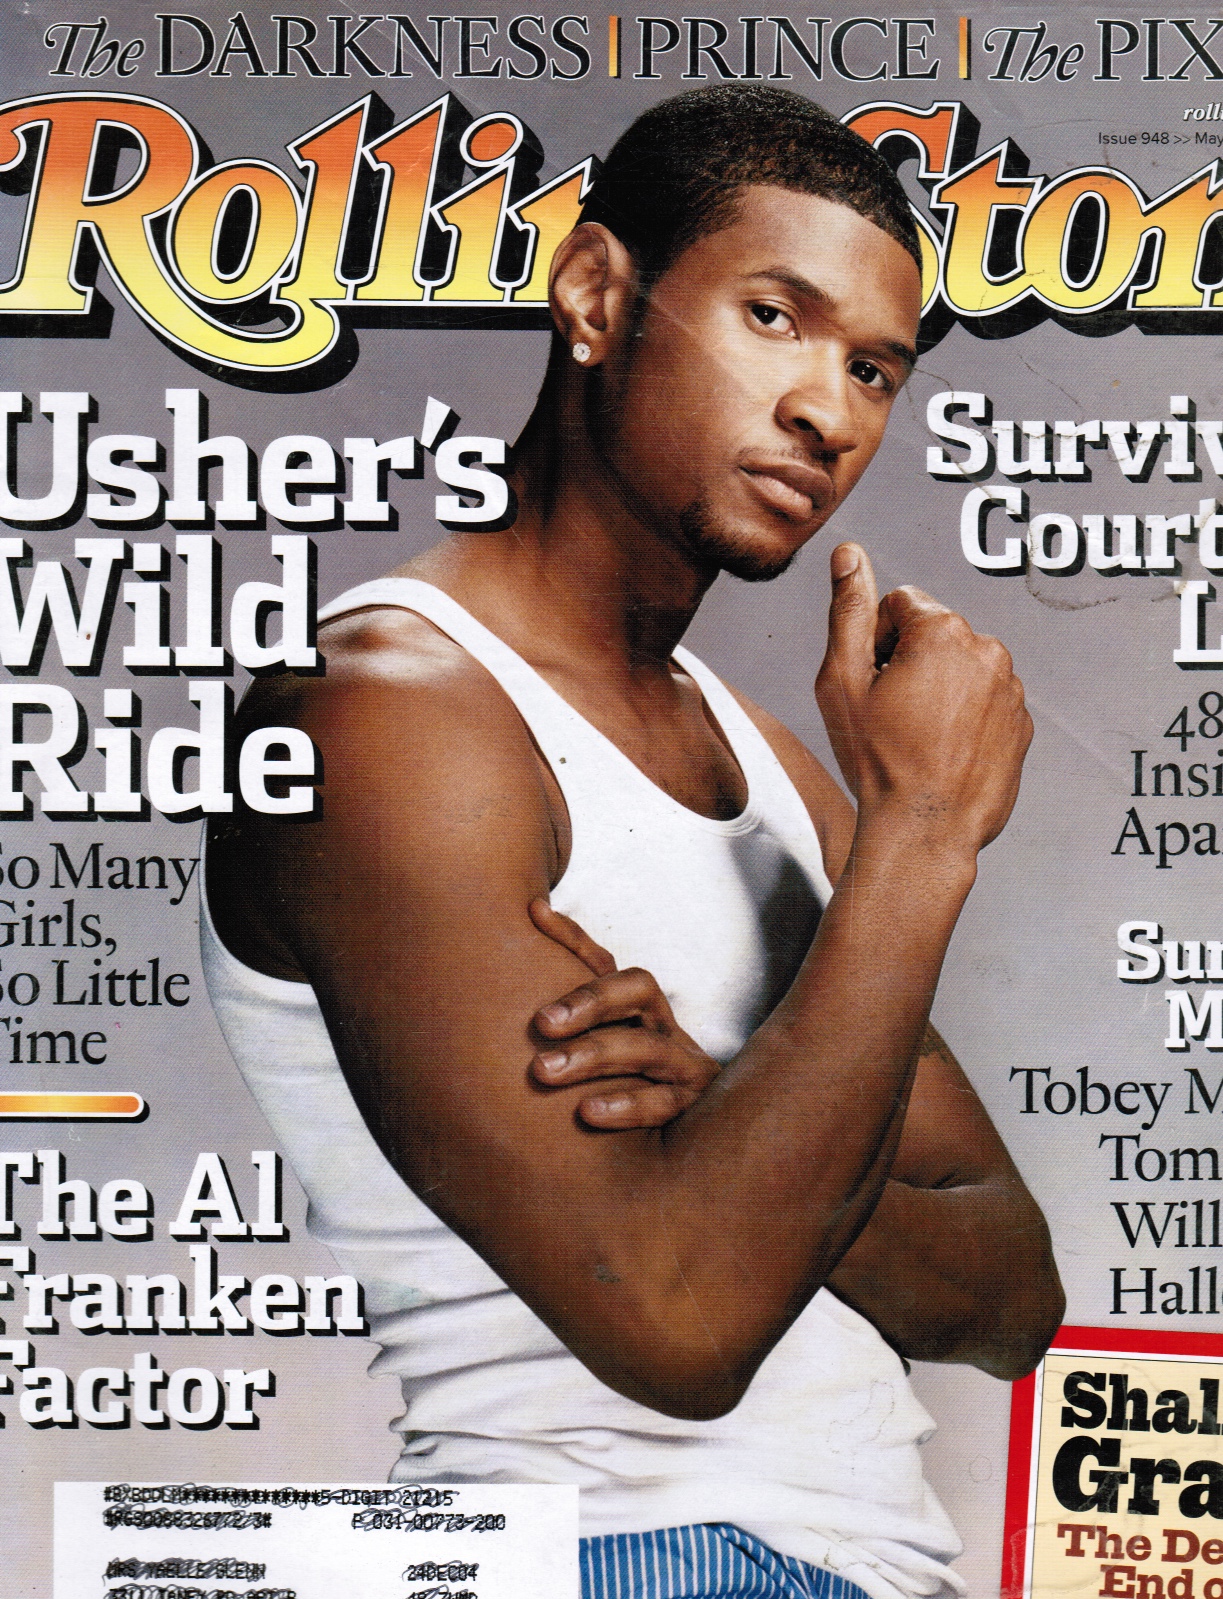 WENNER, JANN S (EDITOR) - Rolling Stone Magazine #948 May 13th, 2004 (Usher)